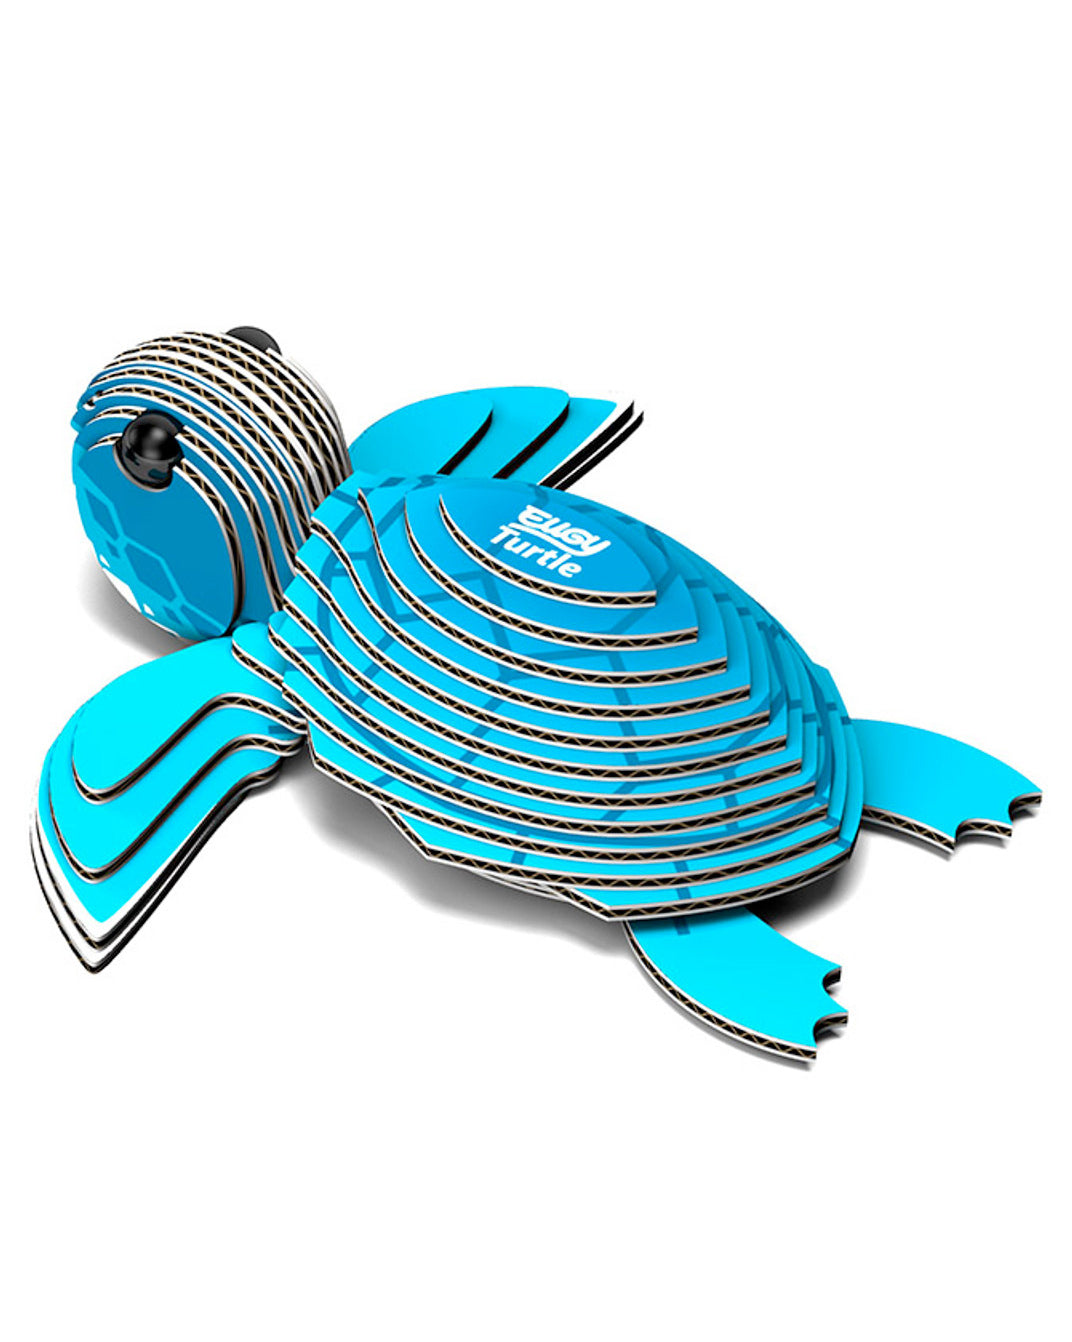 Eugy 038 Turtle 3D Cardboard Model Kit